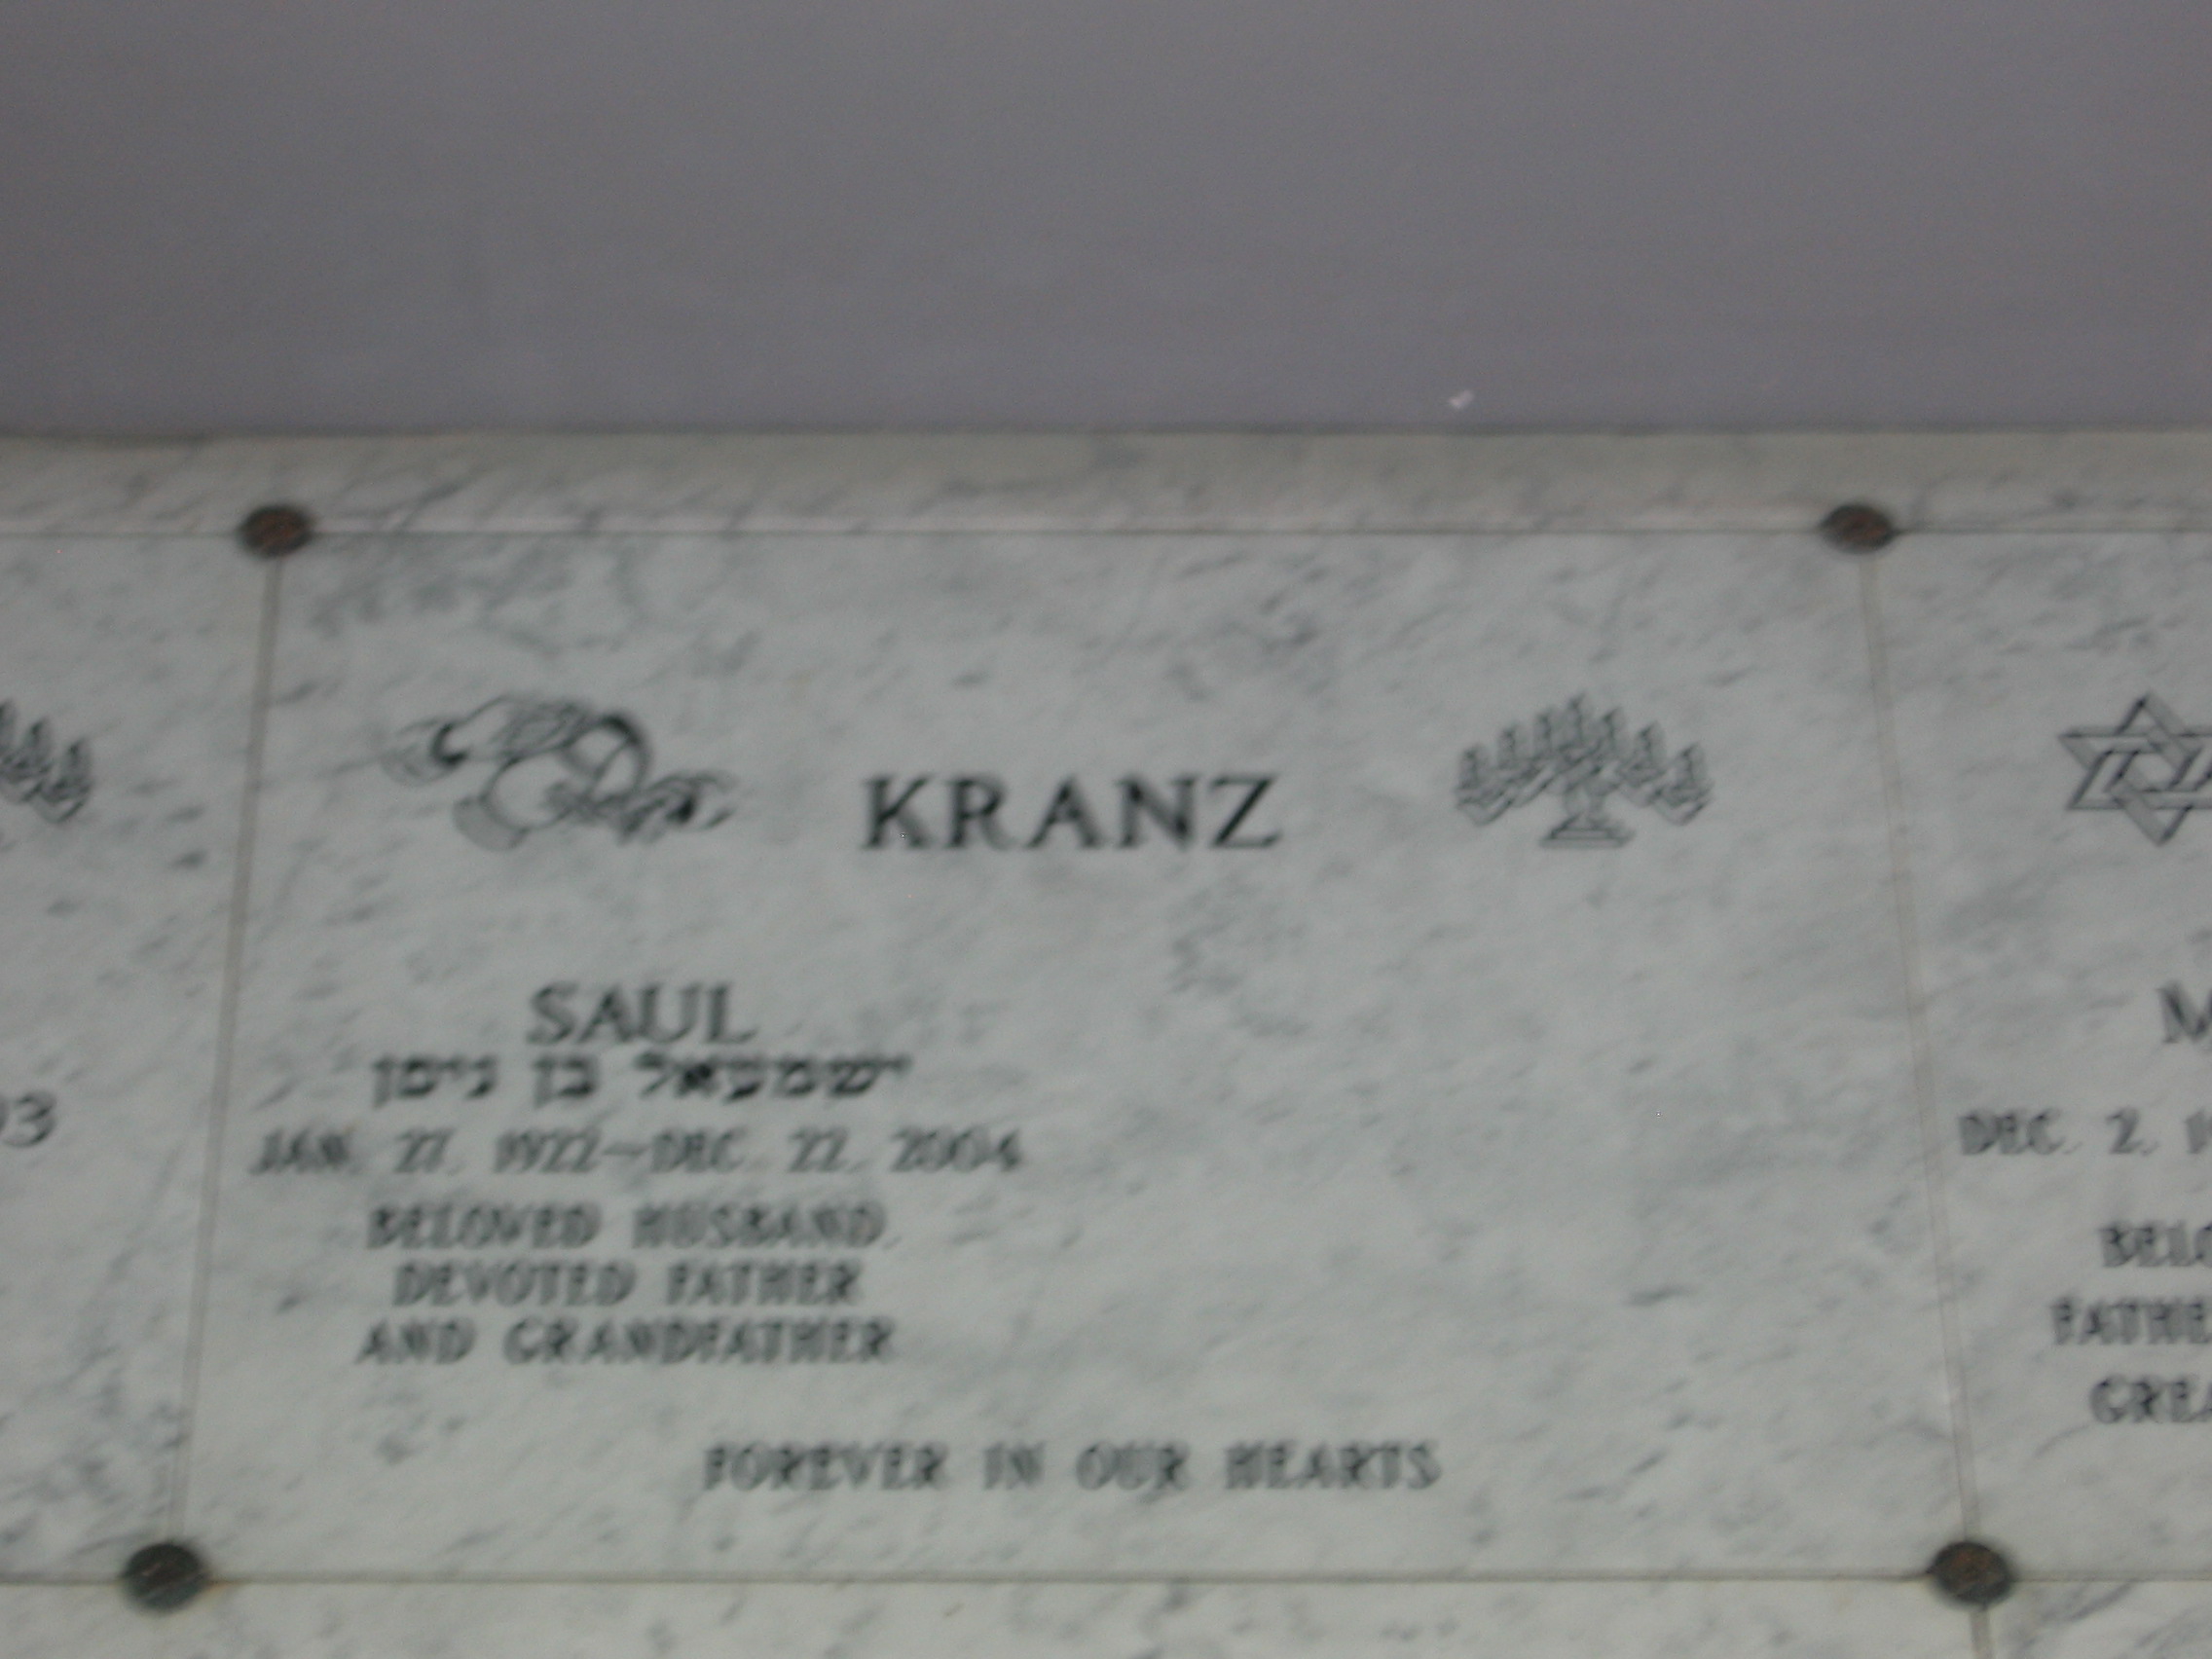 Saul Kranz